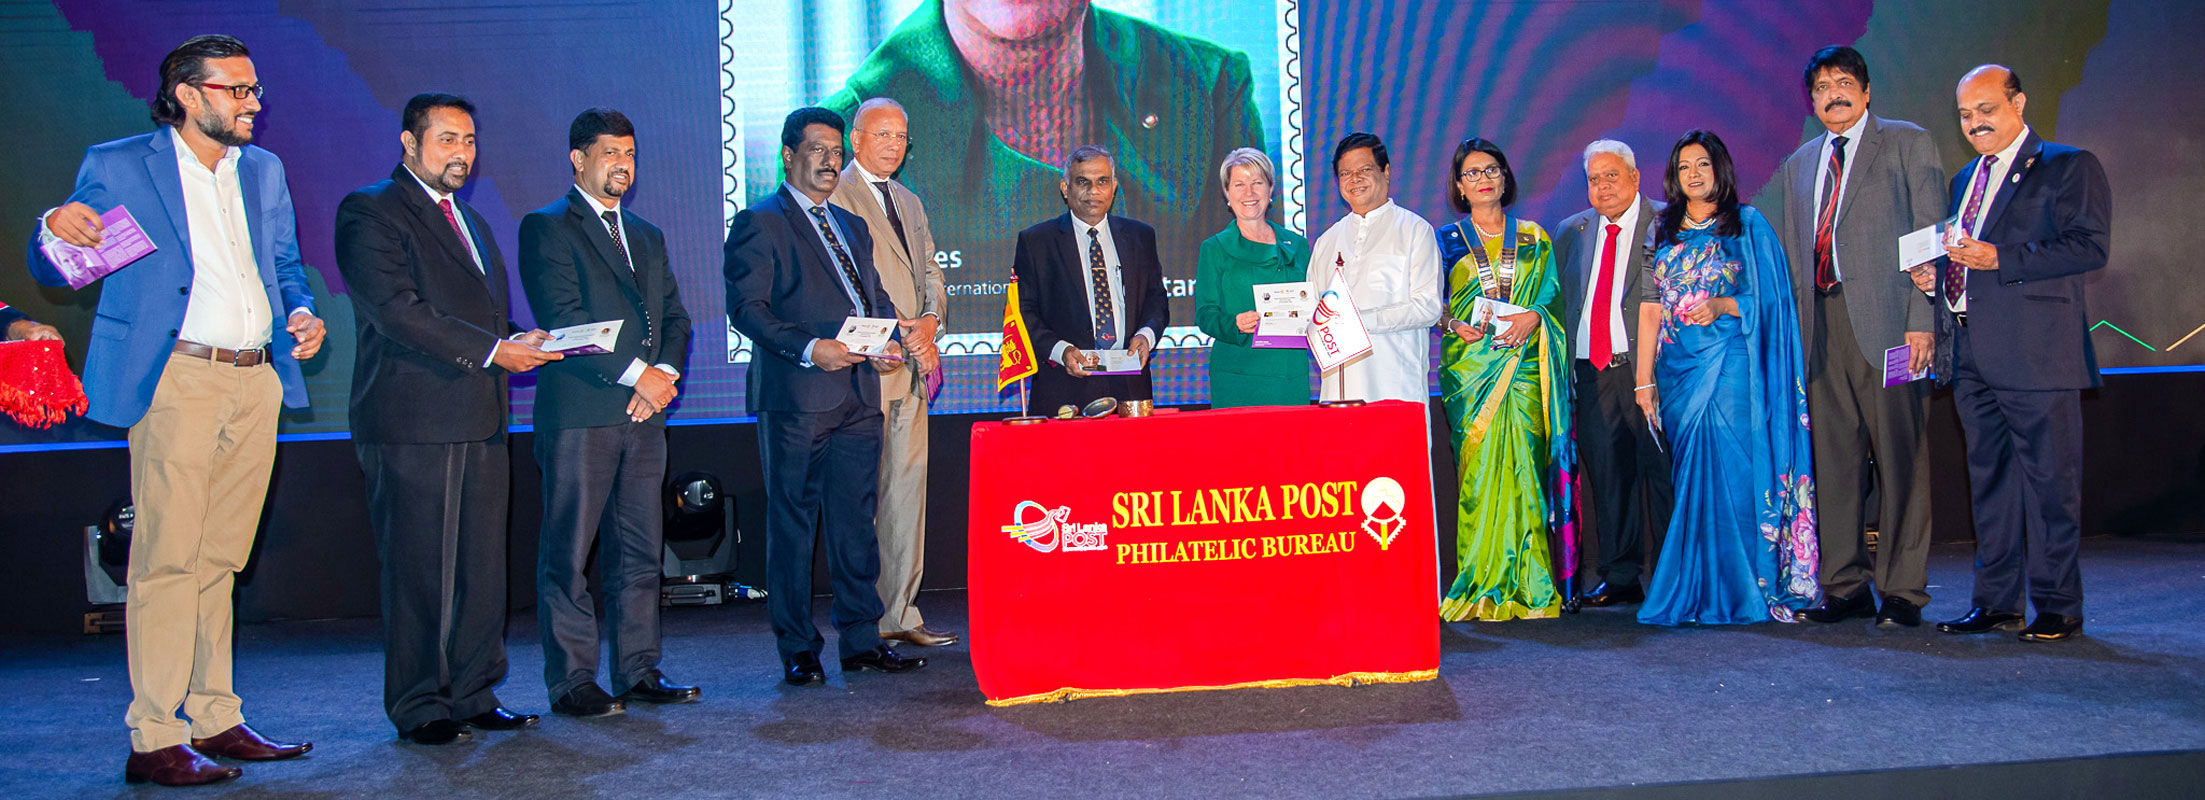 Sri Lankan mass media minister Bandula Gunawardana releasing a postage stamp with a picture of President Jones. Also seen are PRIP Ravindran, DG Pubudu, PDGs Bhashkumar Rajan, Gowri Rajan, Krish Rajendran and Ajith Weerasinghe. 